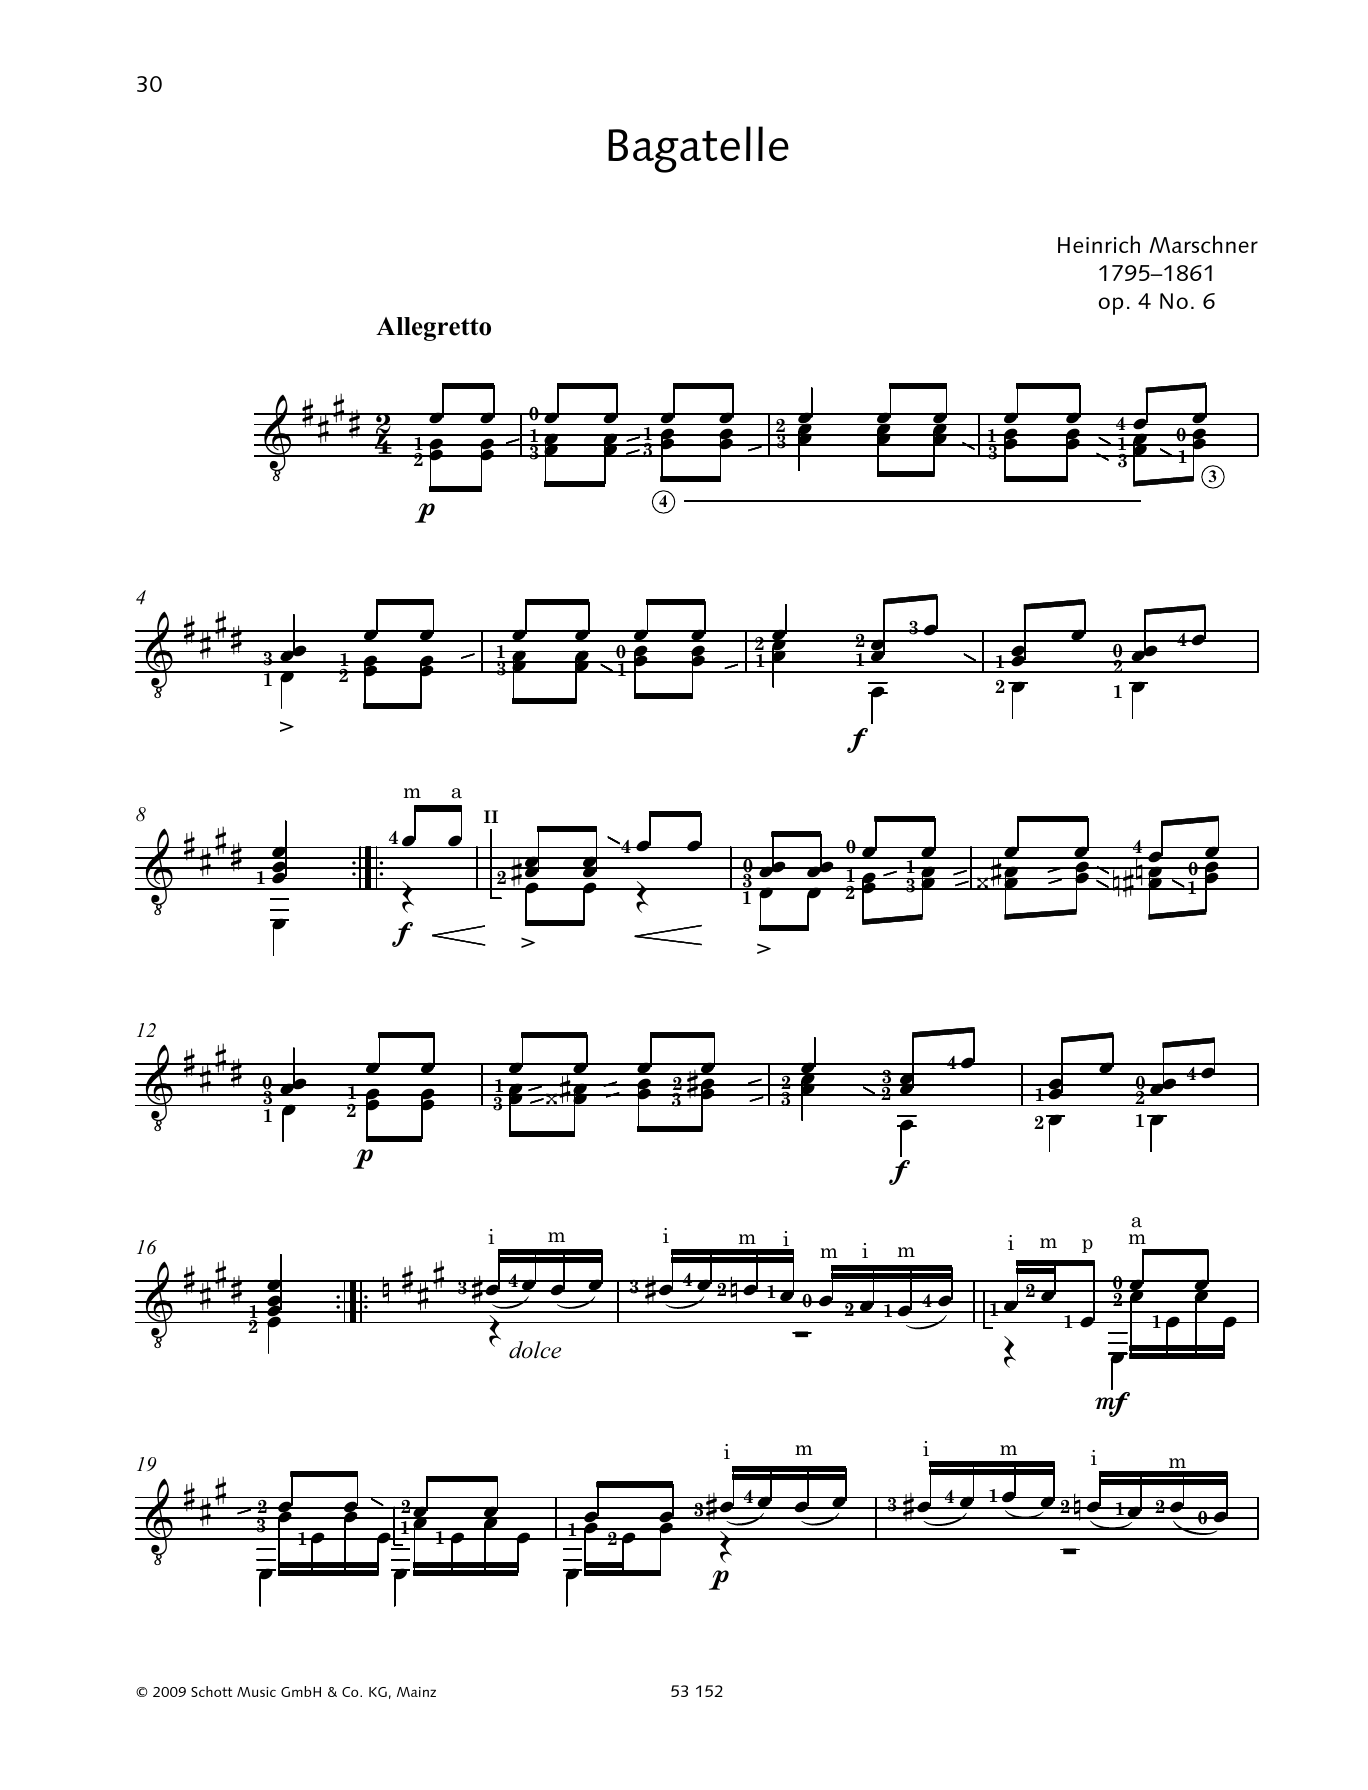 Heinrich Marschner Bagatelle Sheet Music Notes & Chords for Solo Guitar - Download or Print PDF